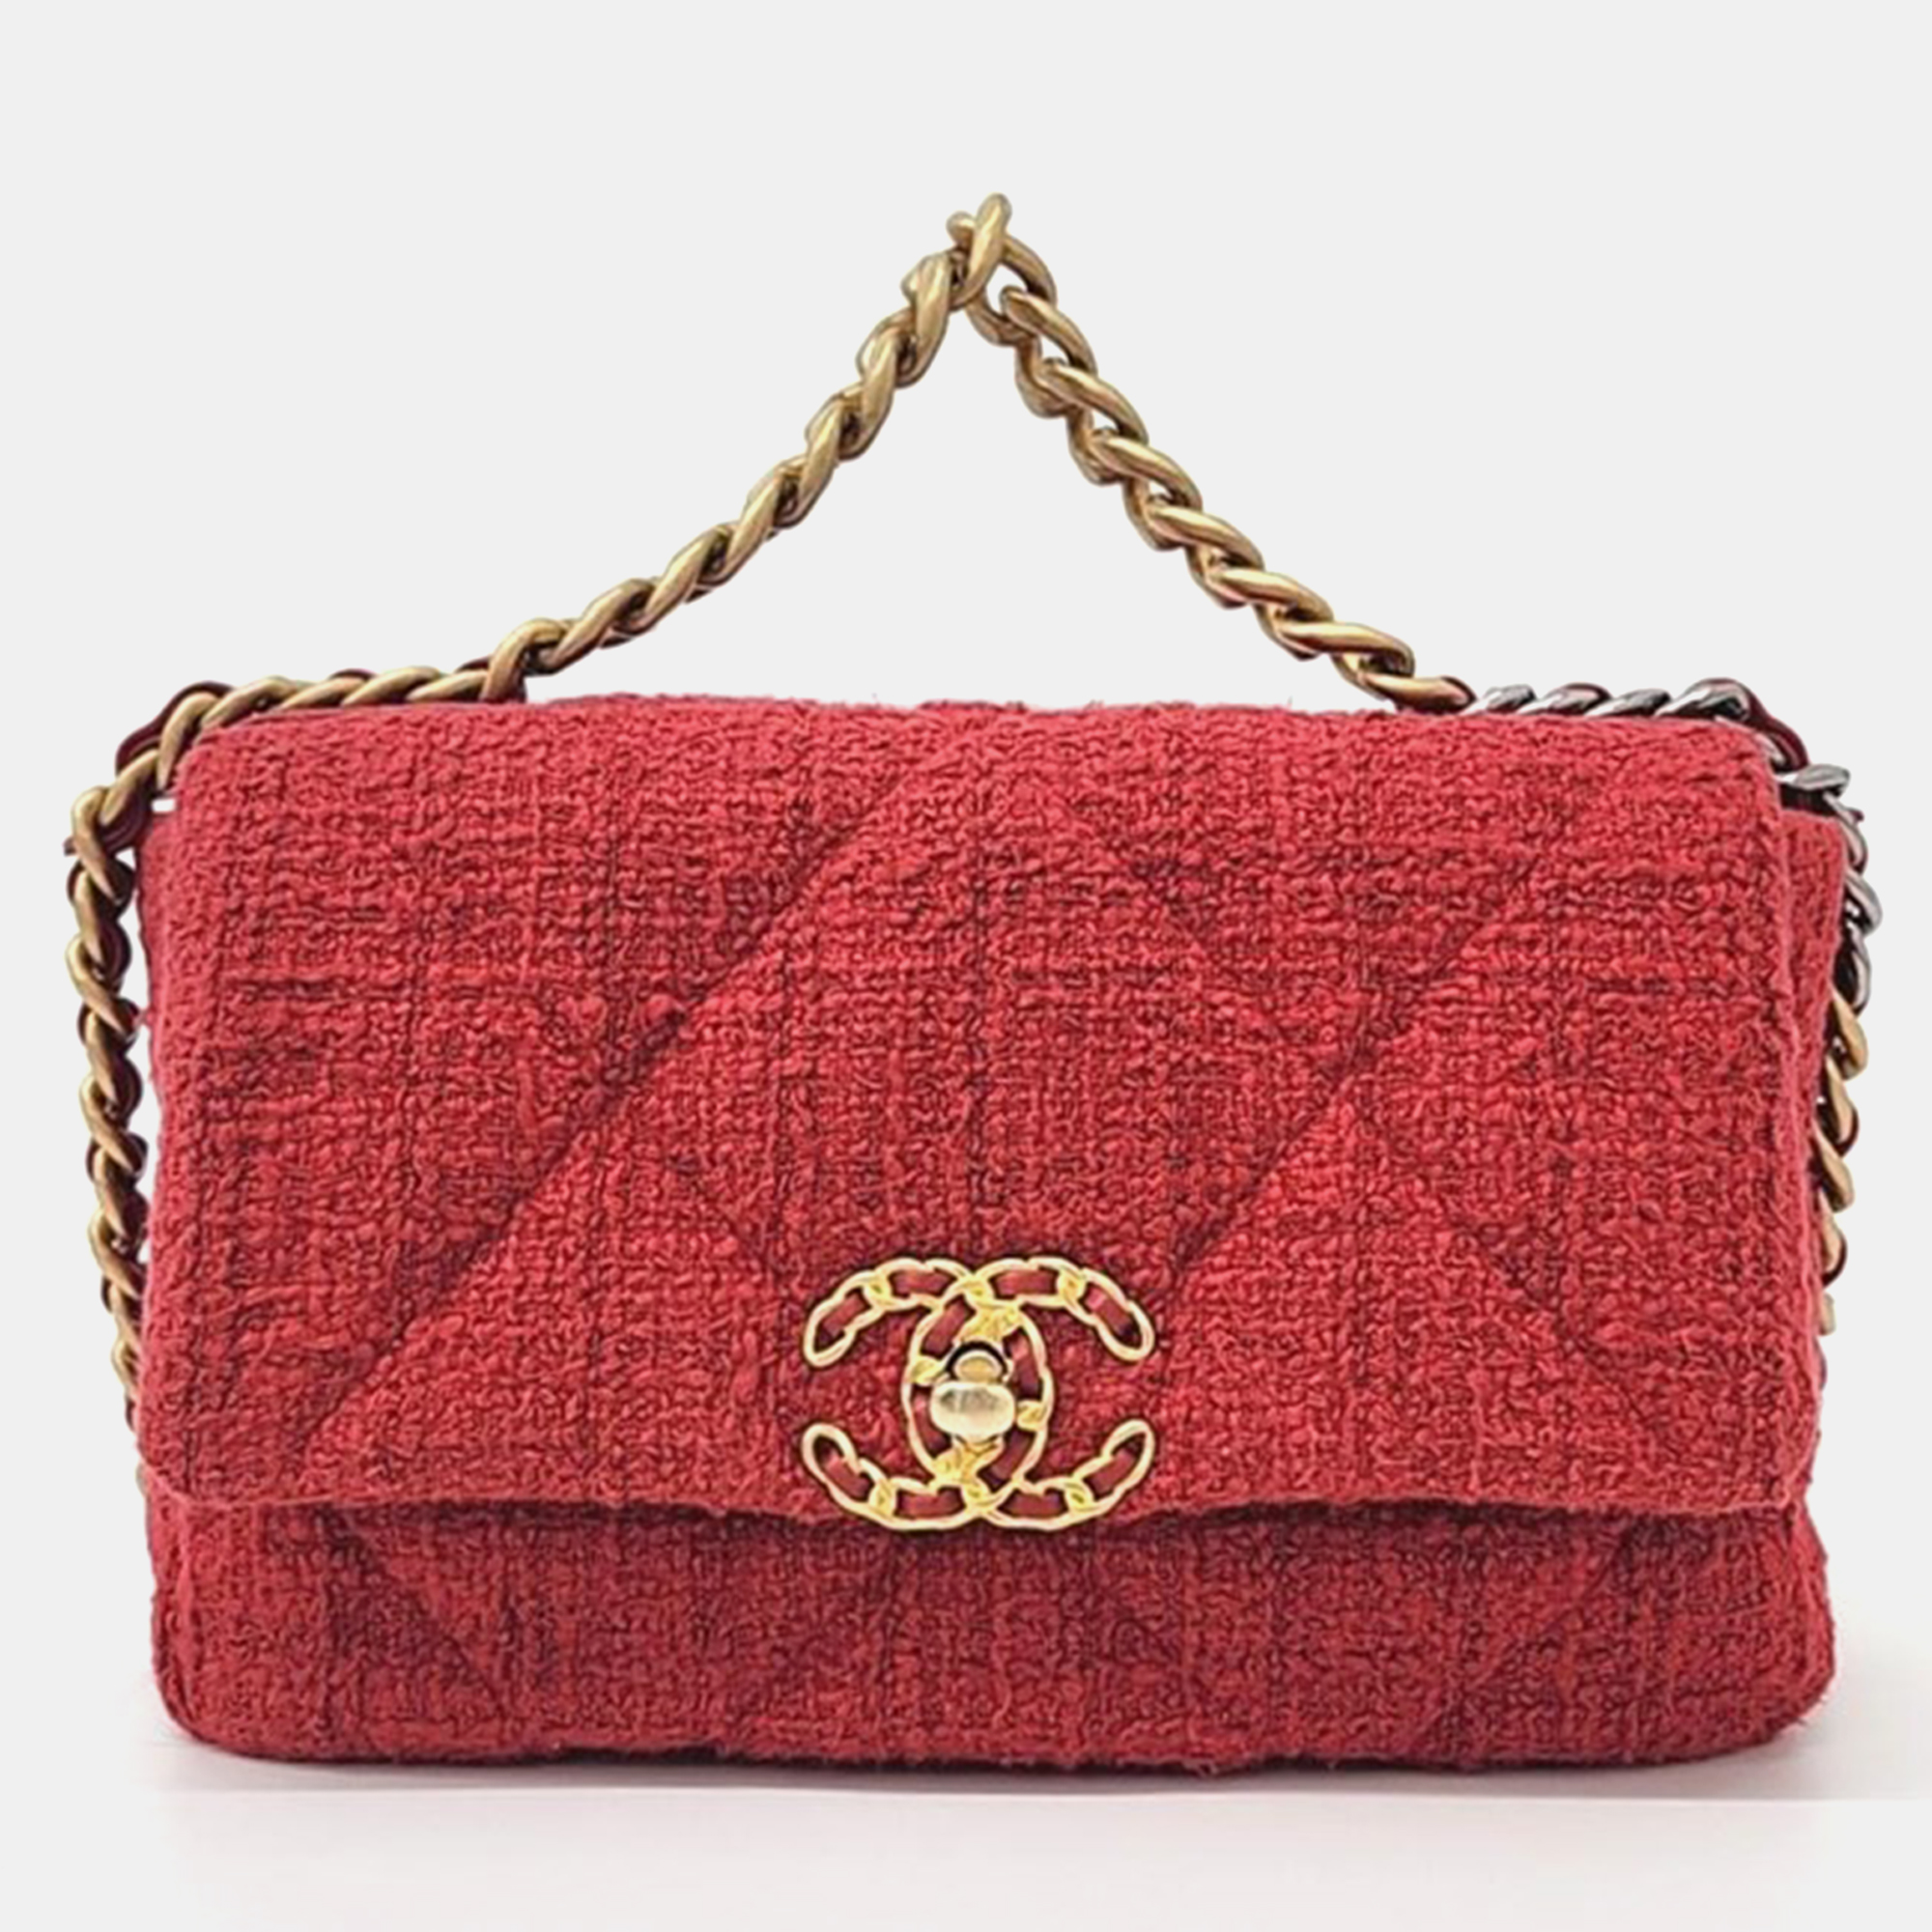 Chanel tweed 19 flap bag small